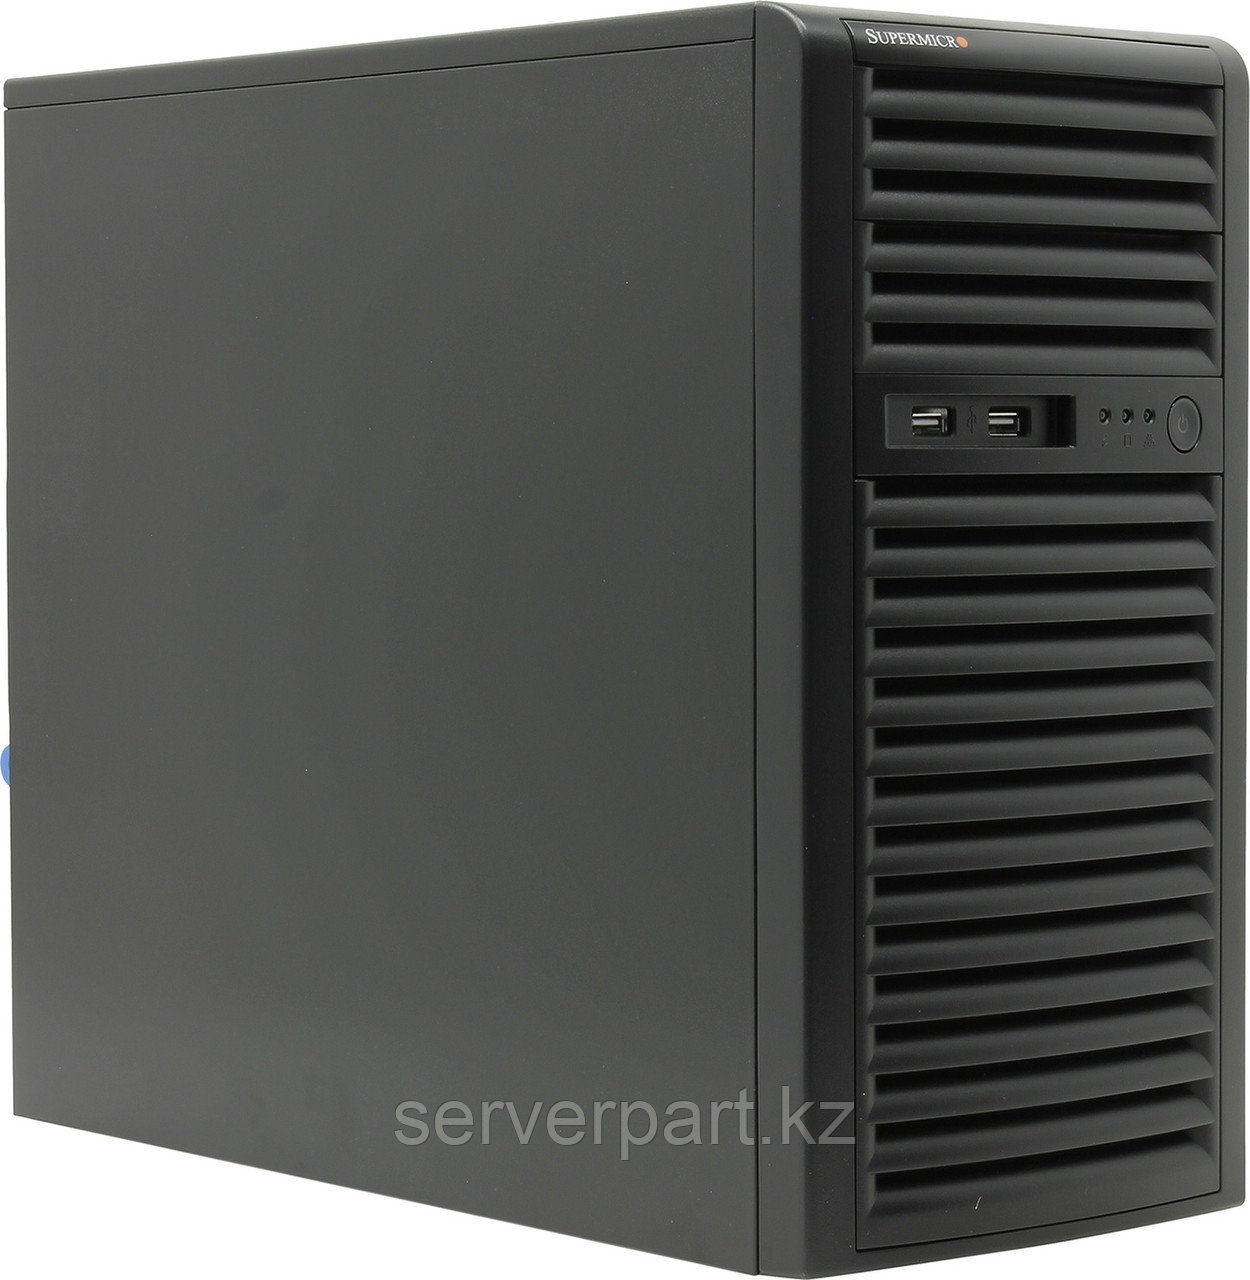 Сервер Supermicro SYS-5039D Tower/4-core intel xeon E3-1220v6 3GHz/16GB EUDIMM/1x480GB SSD MU Hyb, фото 1